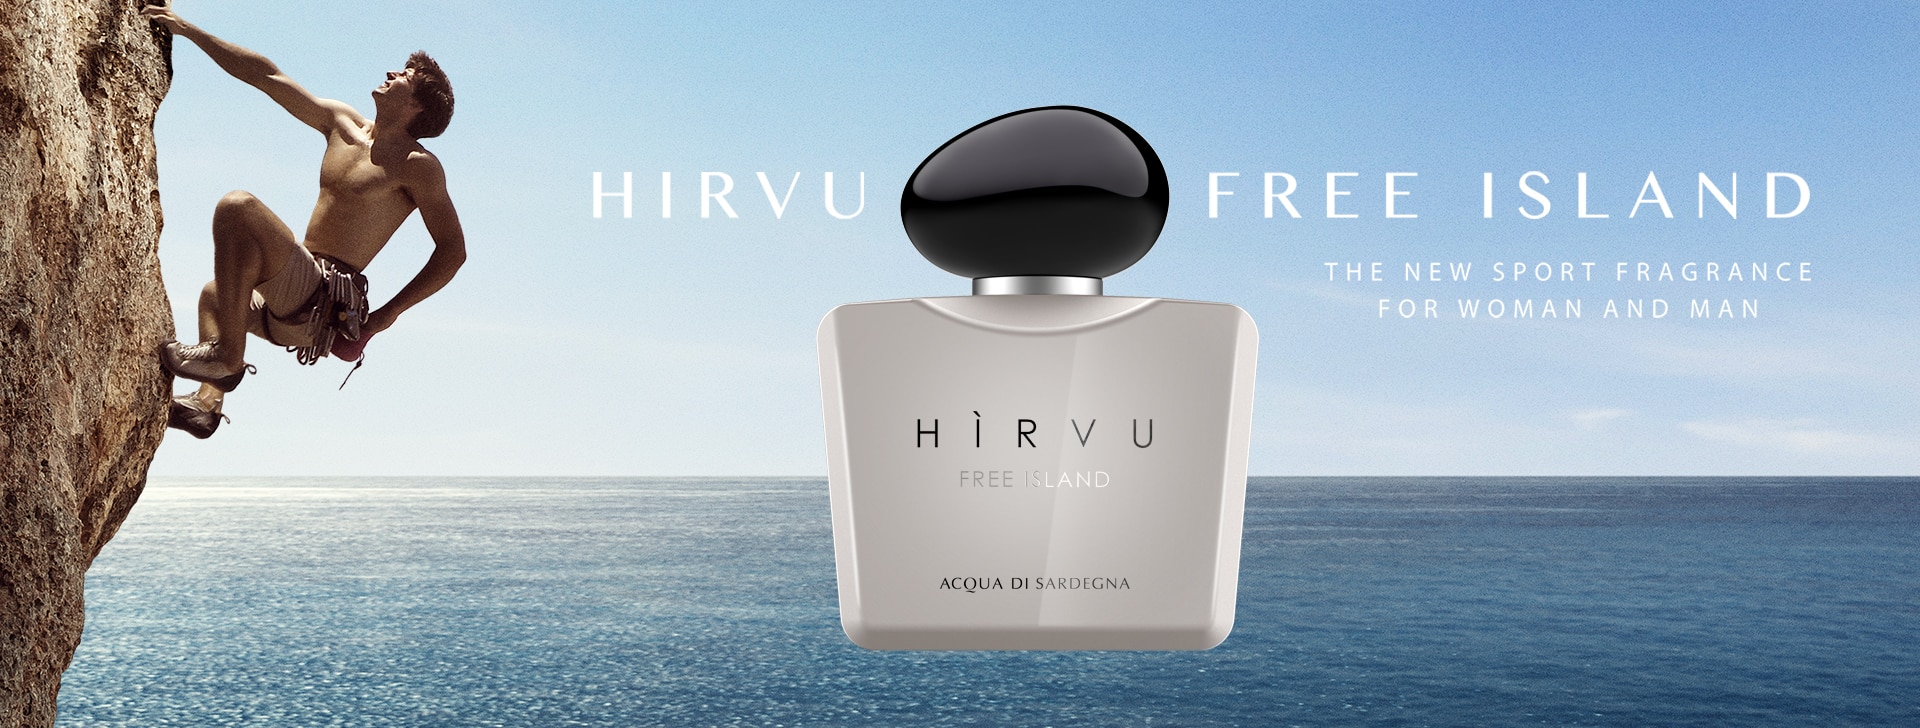 Acqua Di Sardegna Parfums - Hirvu Parfum